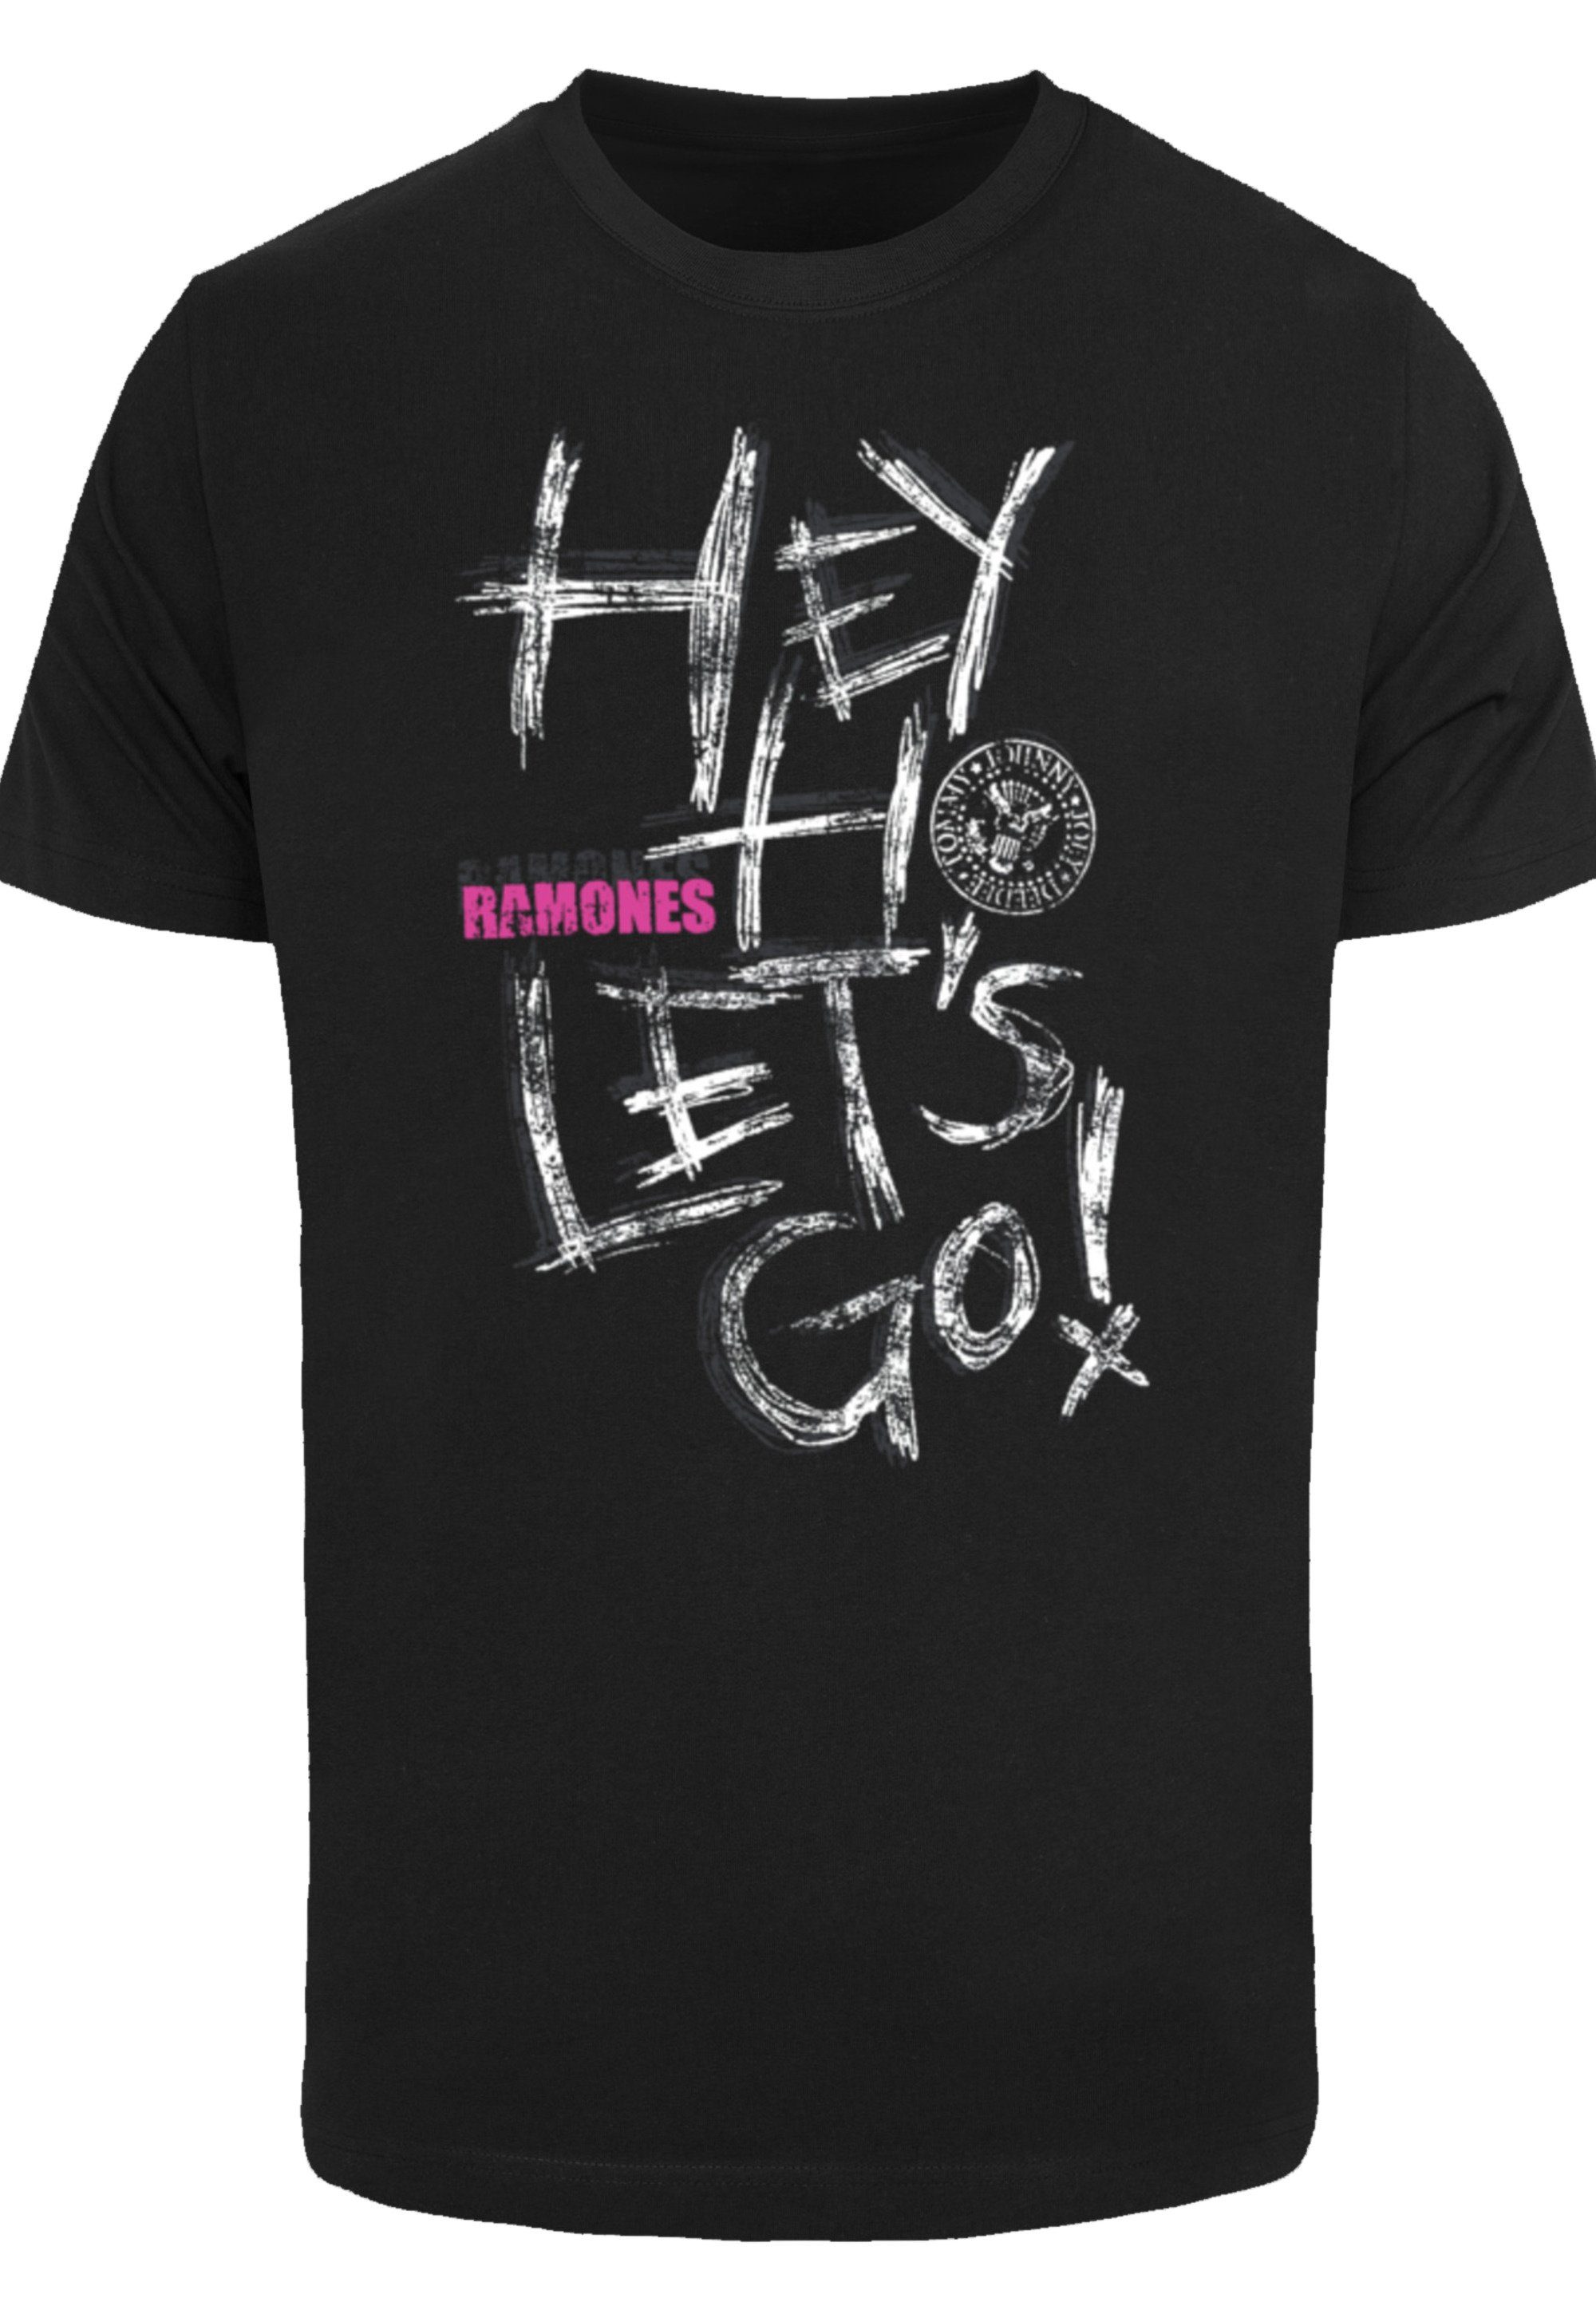 Qualität, Band Hey Rock-Musik Let's Premium Musik Go F4NT4STIC T-Shirt Band, Rock Ramones Ho